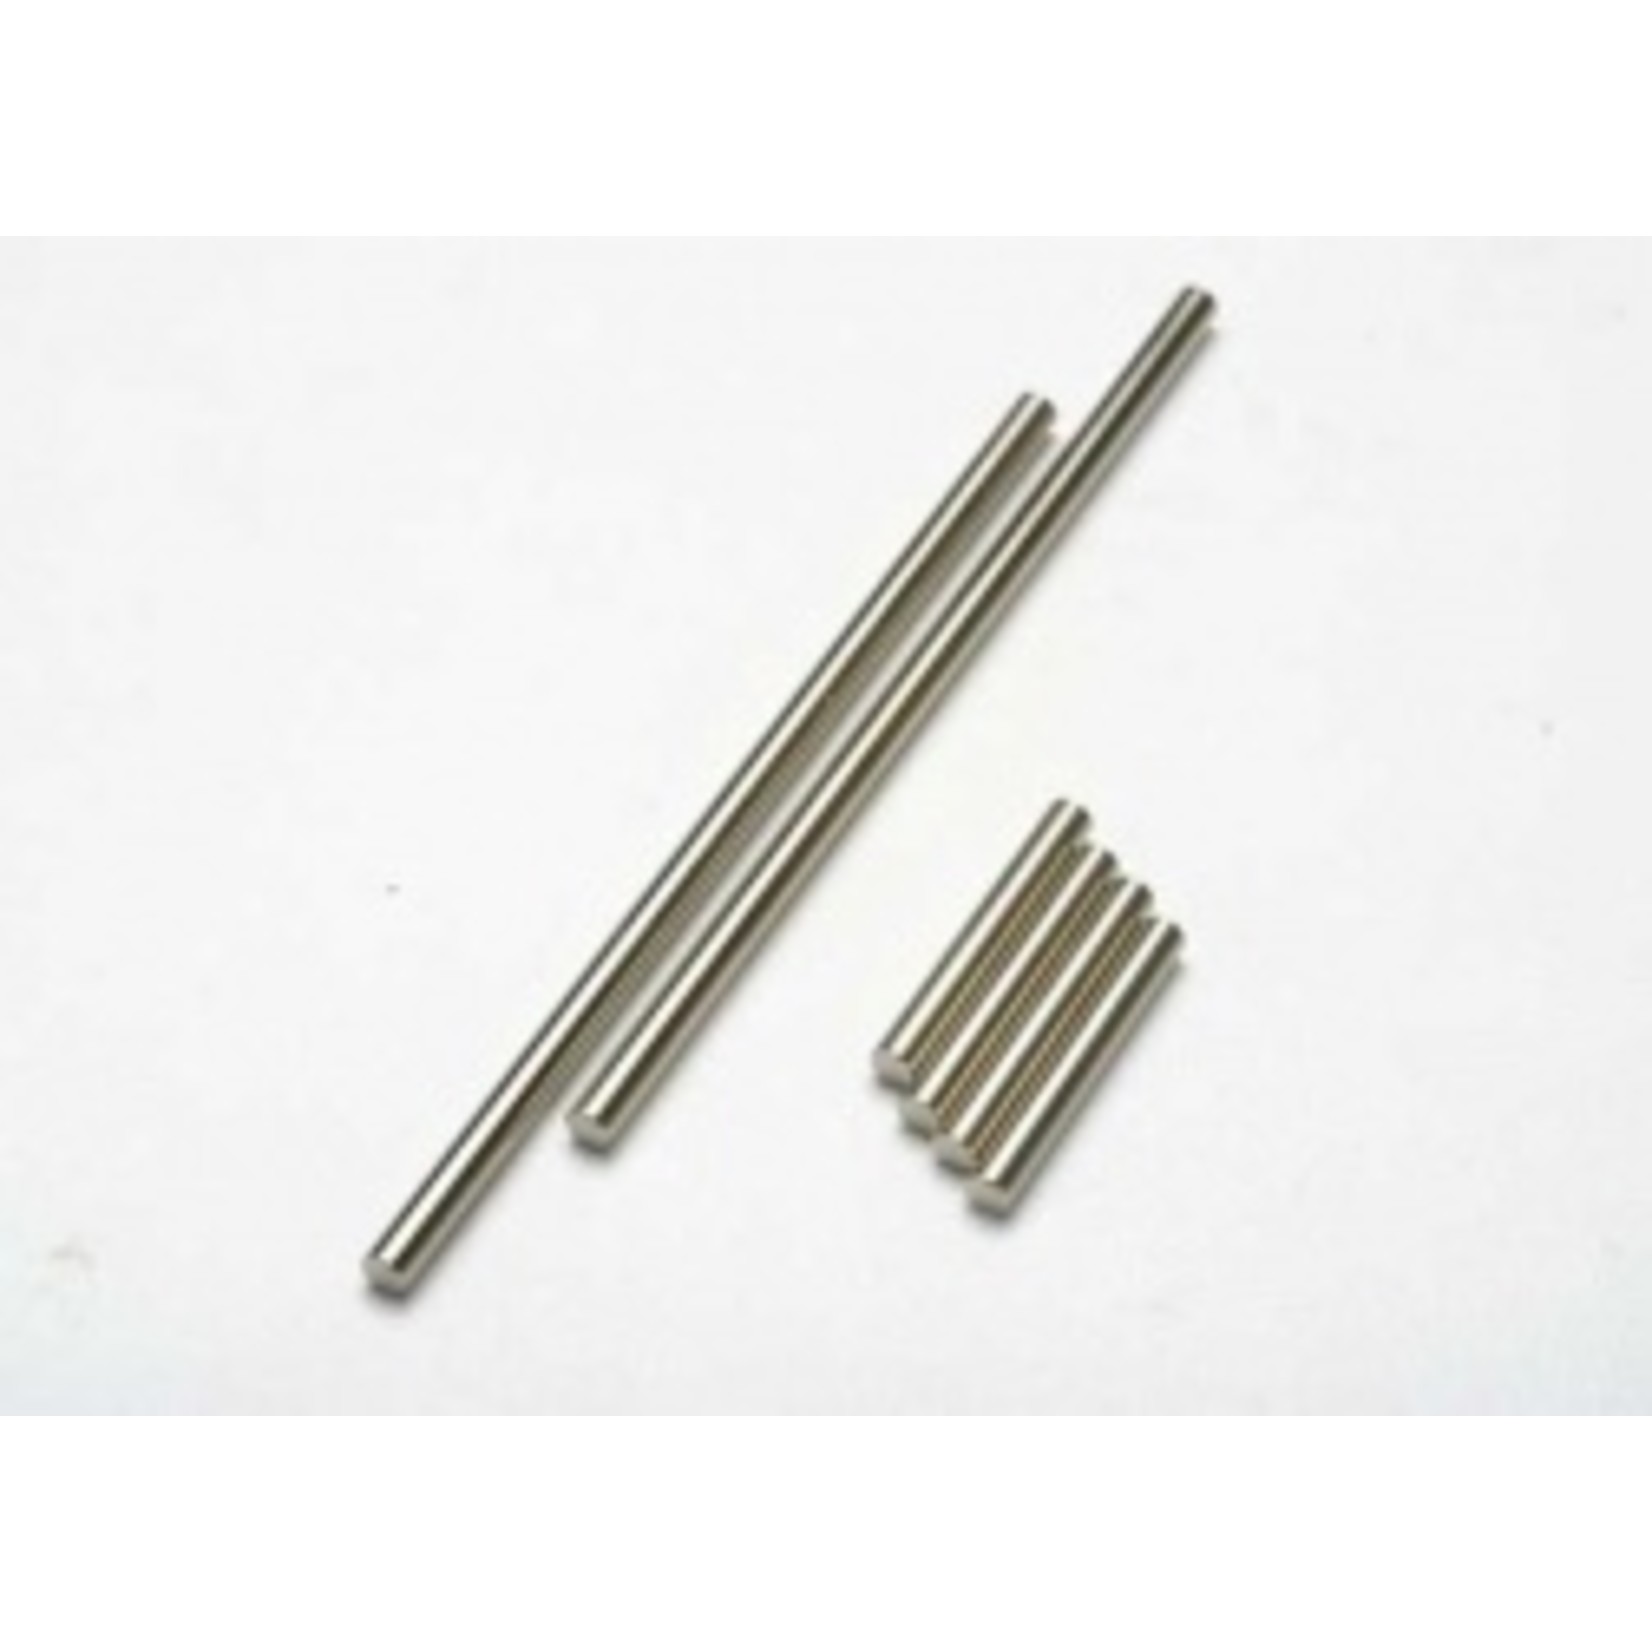 Traxxas 5161 Suspension screw pin set, hardened steel (hex drive)